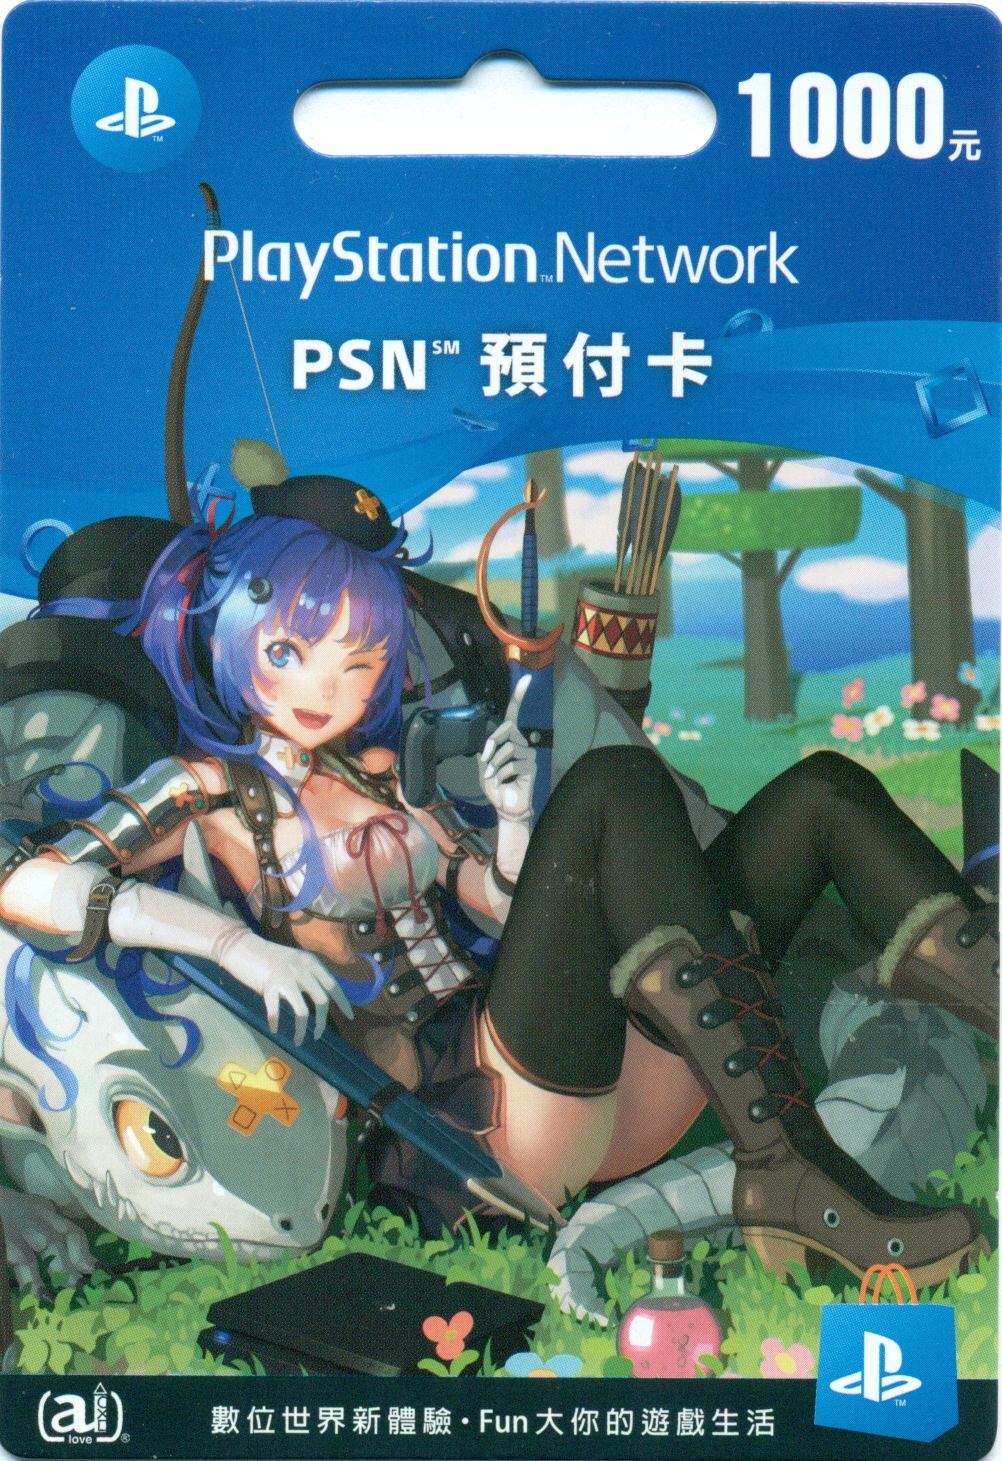 PSN Card 500 NTD  Playstation Network Taiwan digital for PSP, PS3, PSP Go,  PS Vita, PS4, PS5